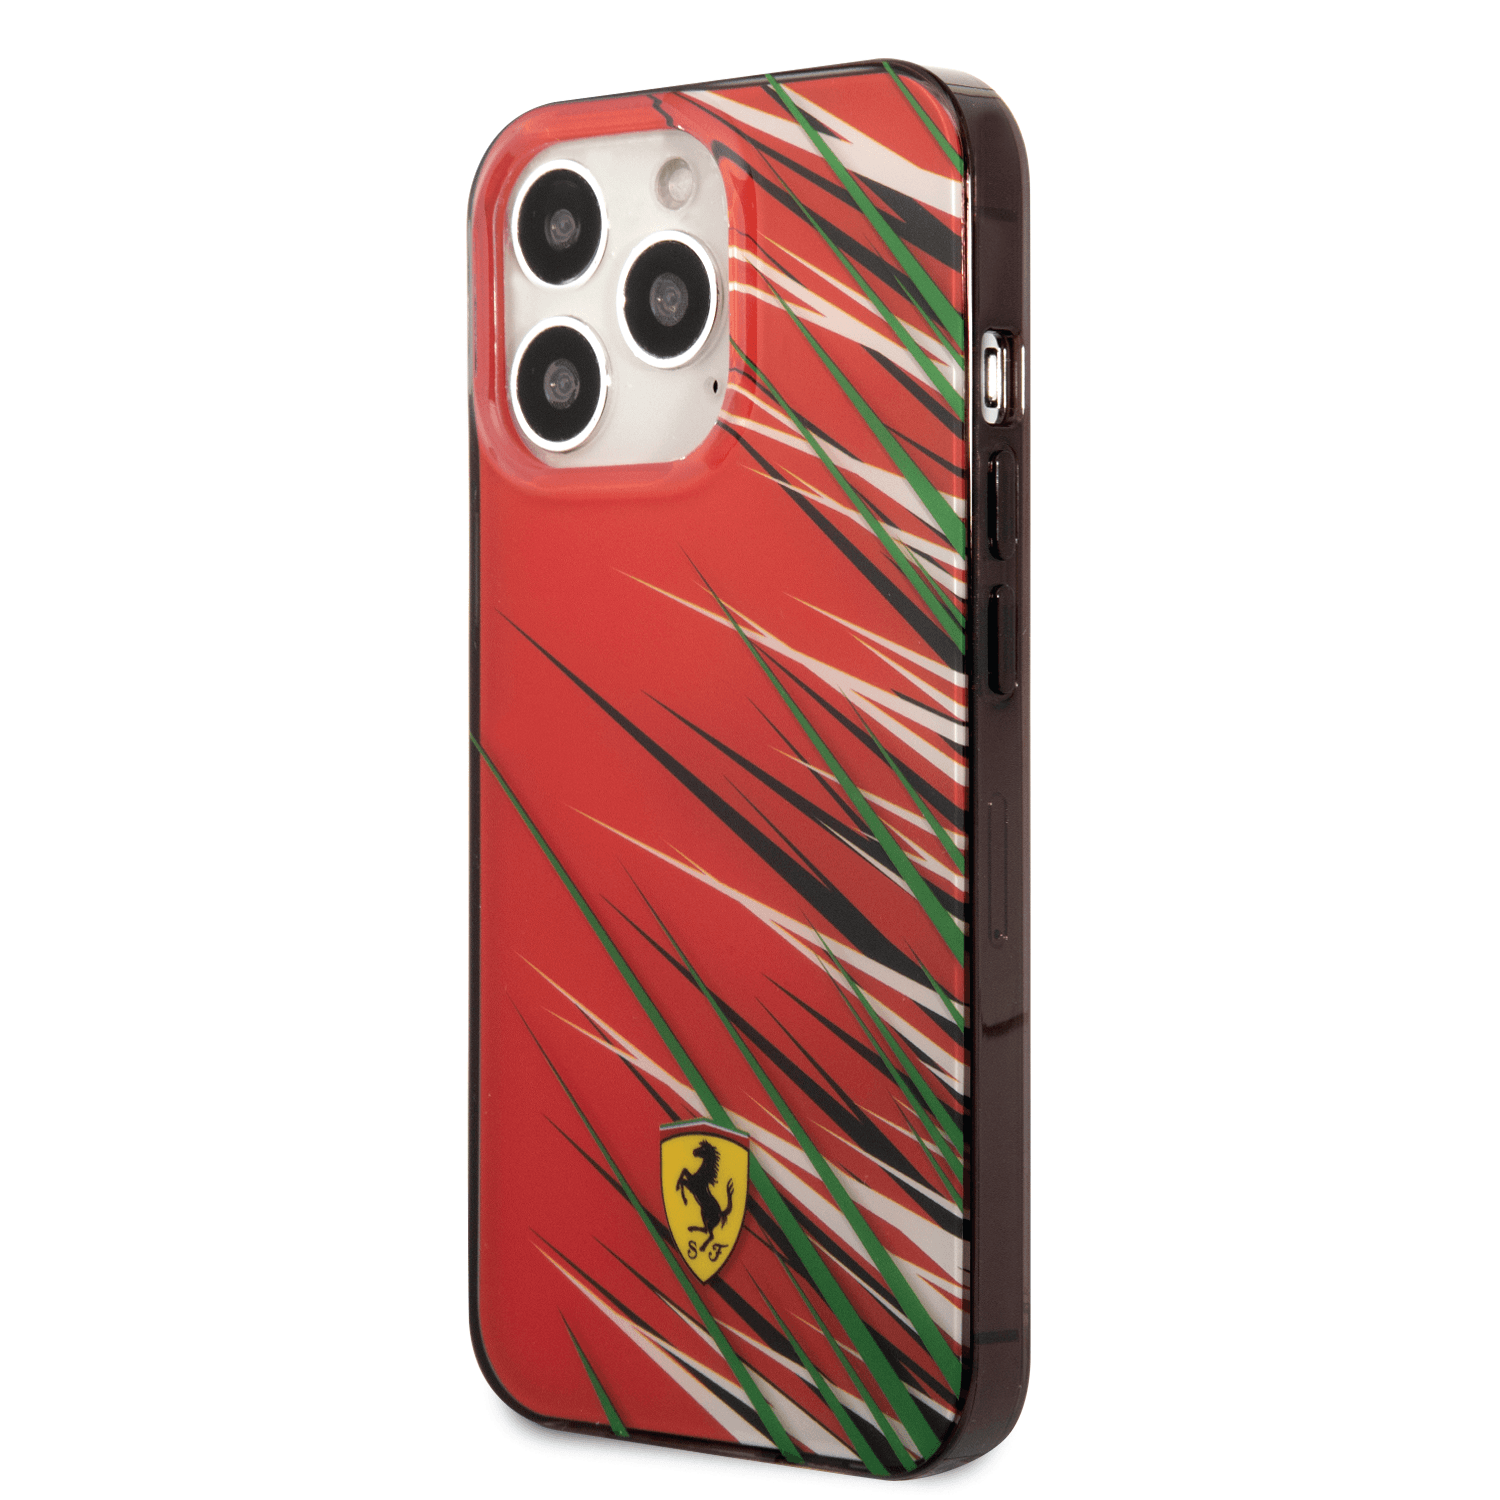 كفر ايفون 14 برو ماكس بولي كربون وسيلكون طباعة مزدوجة فيراري أحمر Ferrari PC/TPU Case With Double Layer Grass Print - cG9zdDoxMzY5NDE3